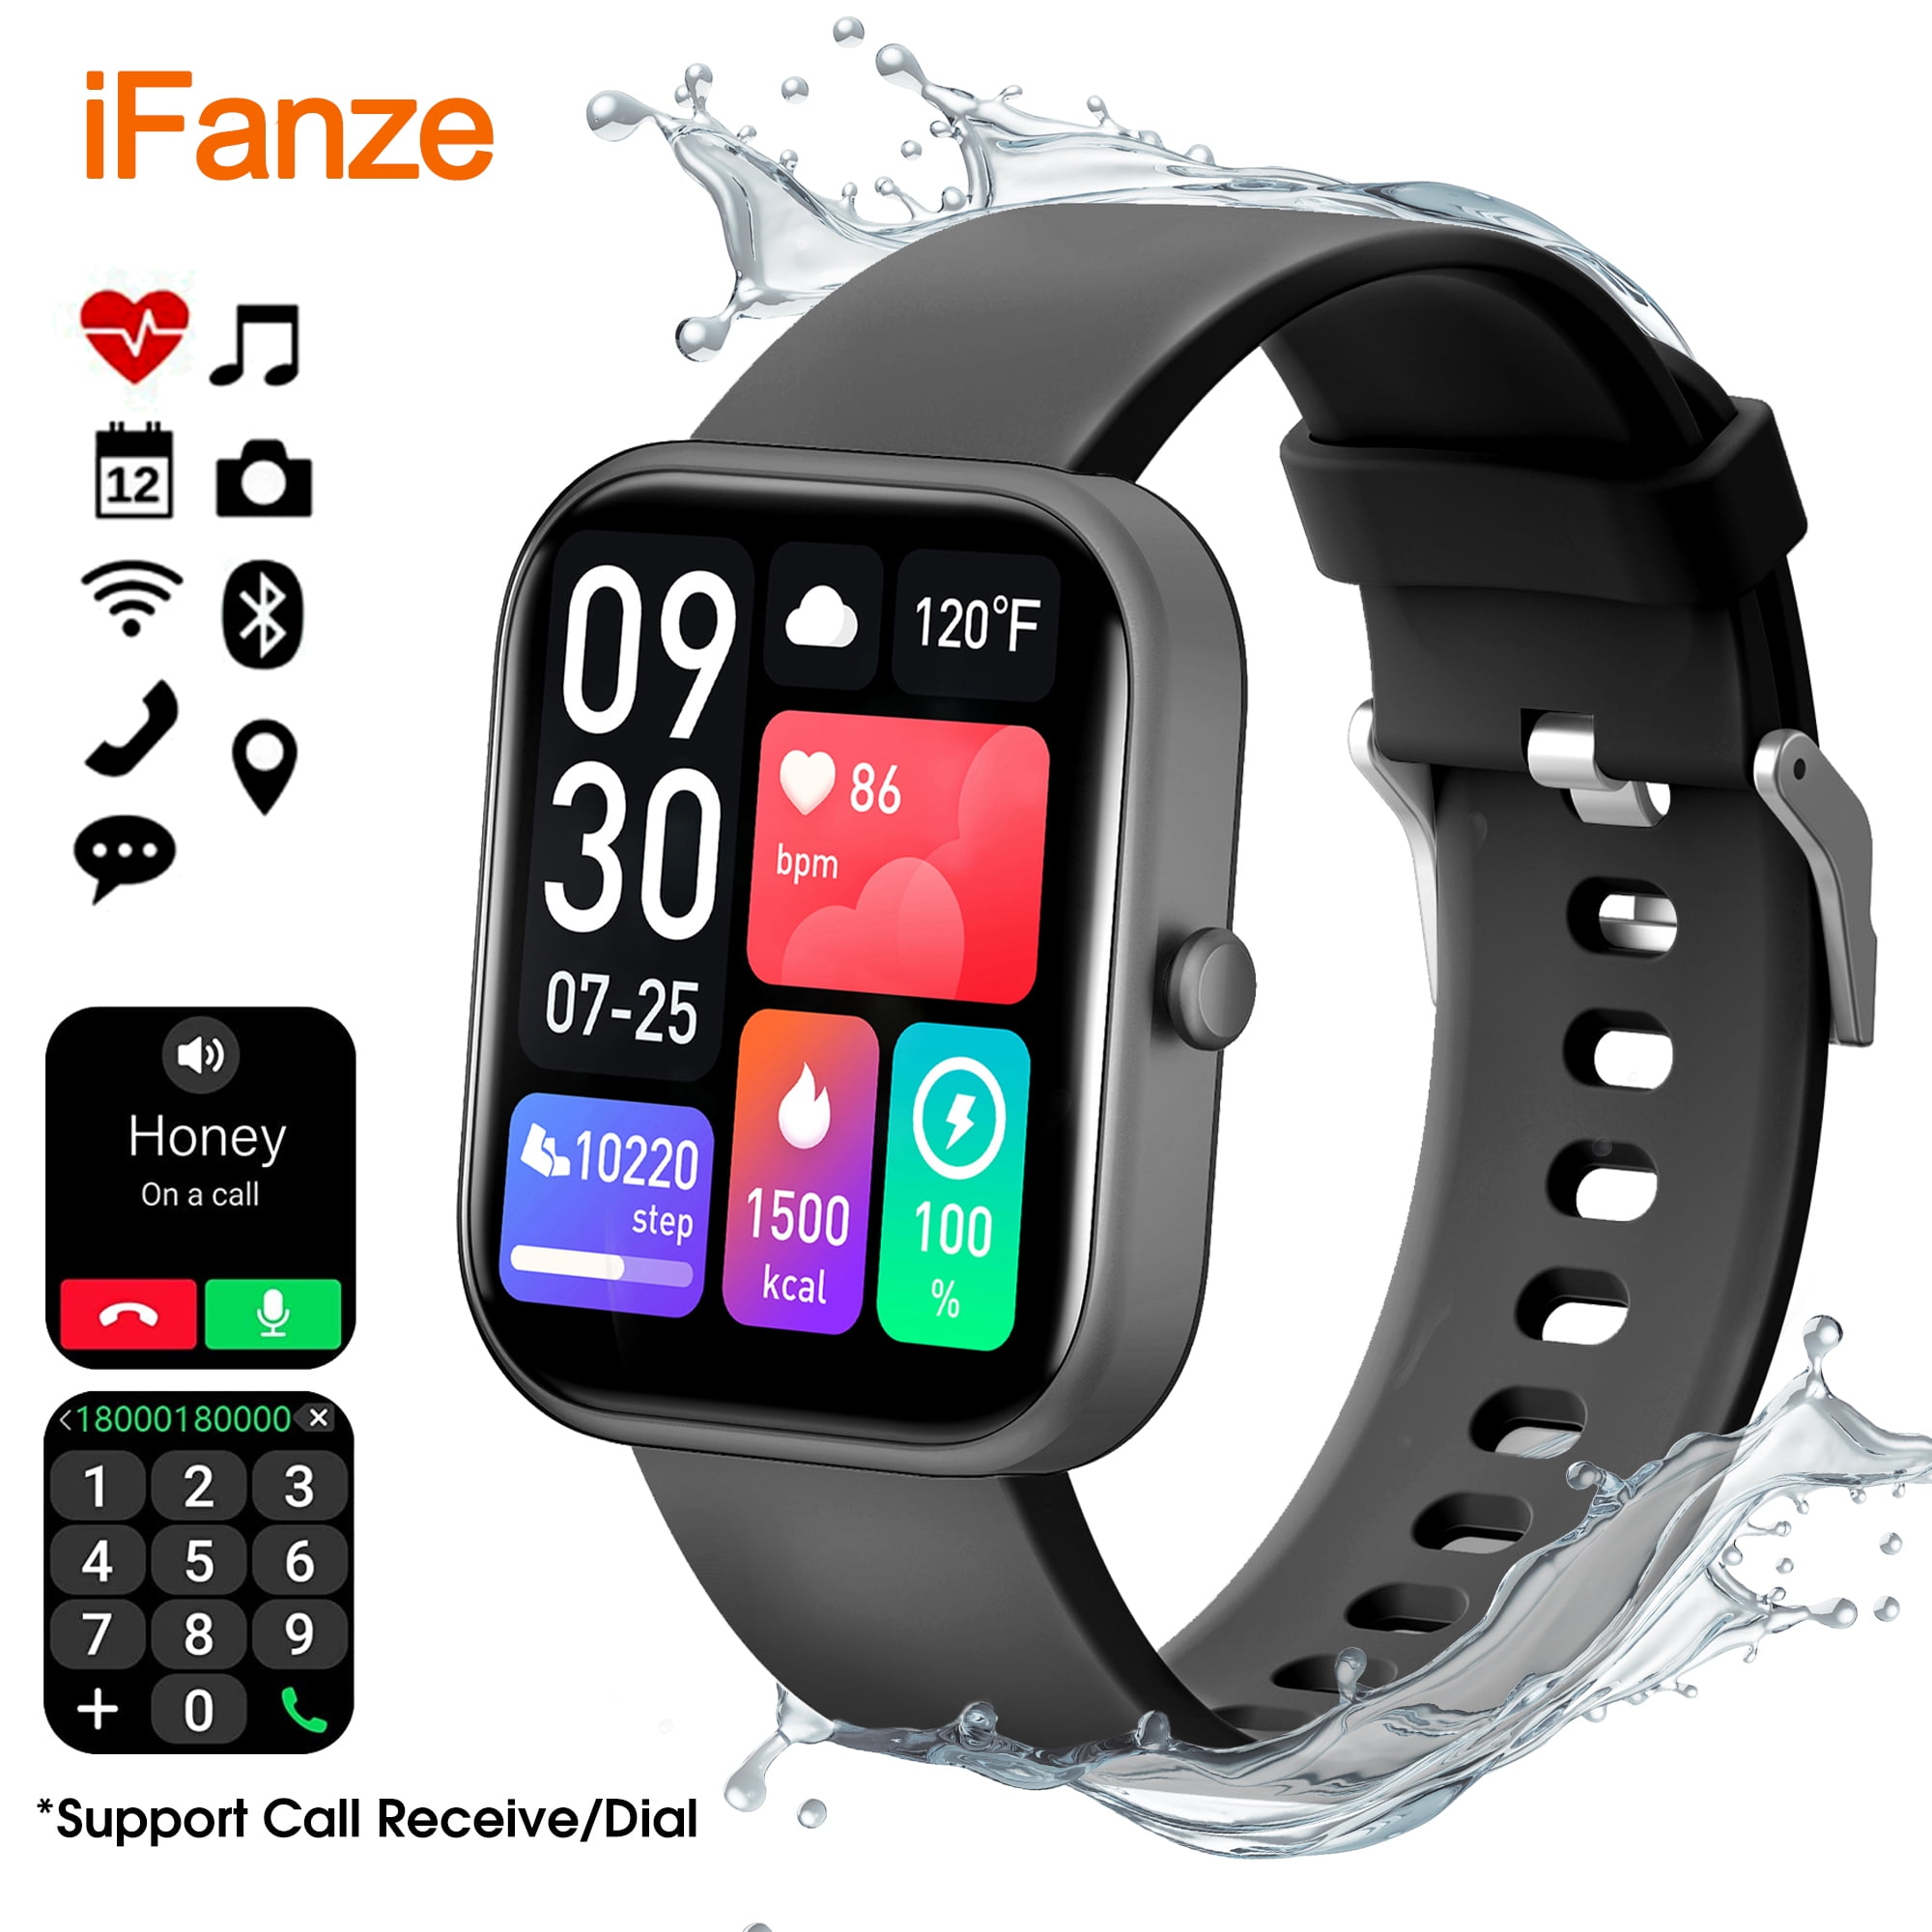 tilgivet morfin hævn Smart Watch for Android and iPhone, Ifanze GTS5 Fitness Tracker Health  Tracker IP68 Waterproof Smartwatch for Women Men,Black - Walmart.com